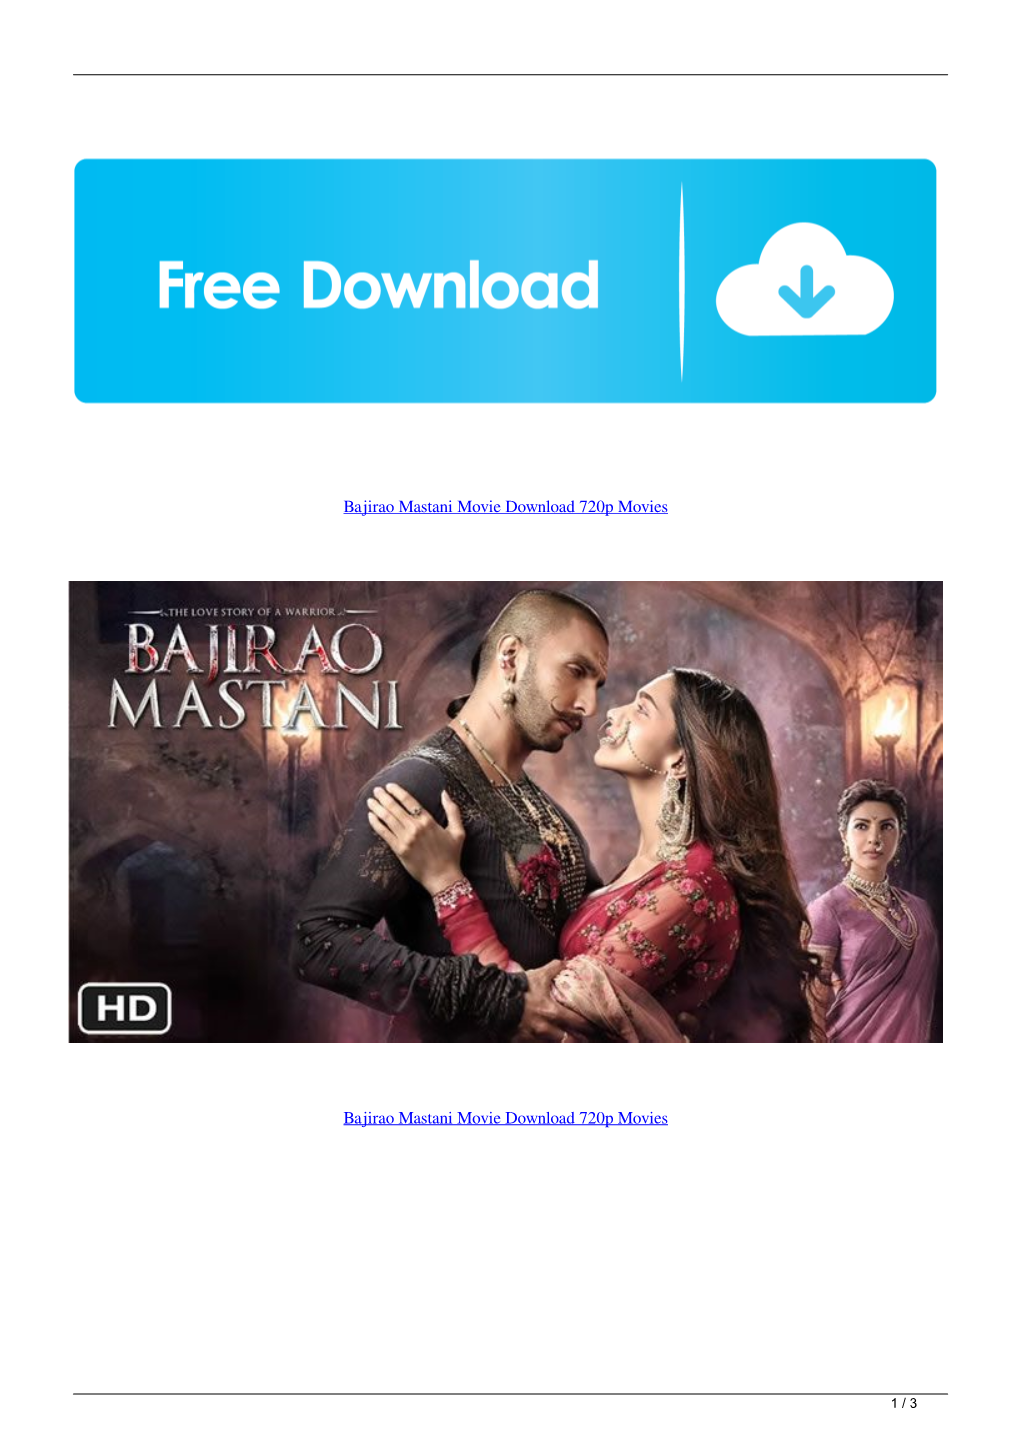 Bajirao Mastani Movie Download 720P Movies